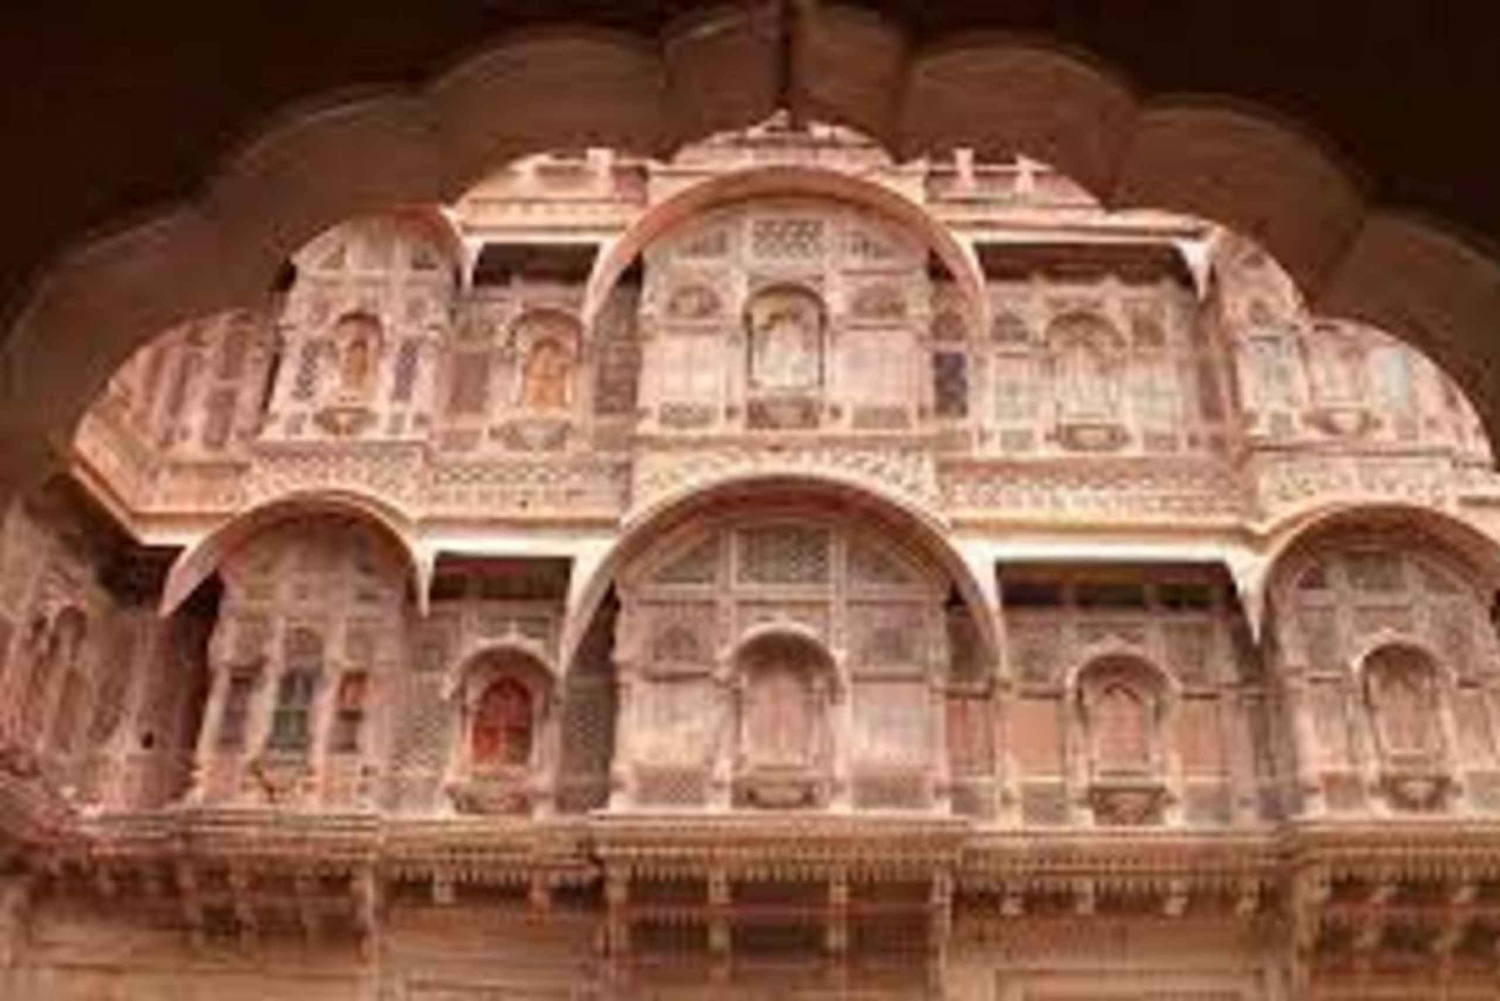 Jodhpur: Mehrangarh Fort, Jaswant Thada en Umaid Bhawan